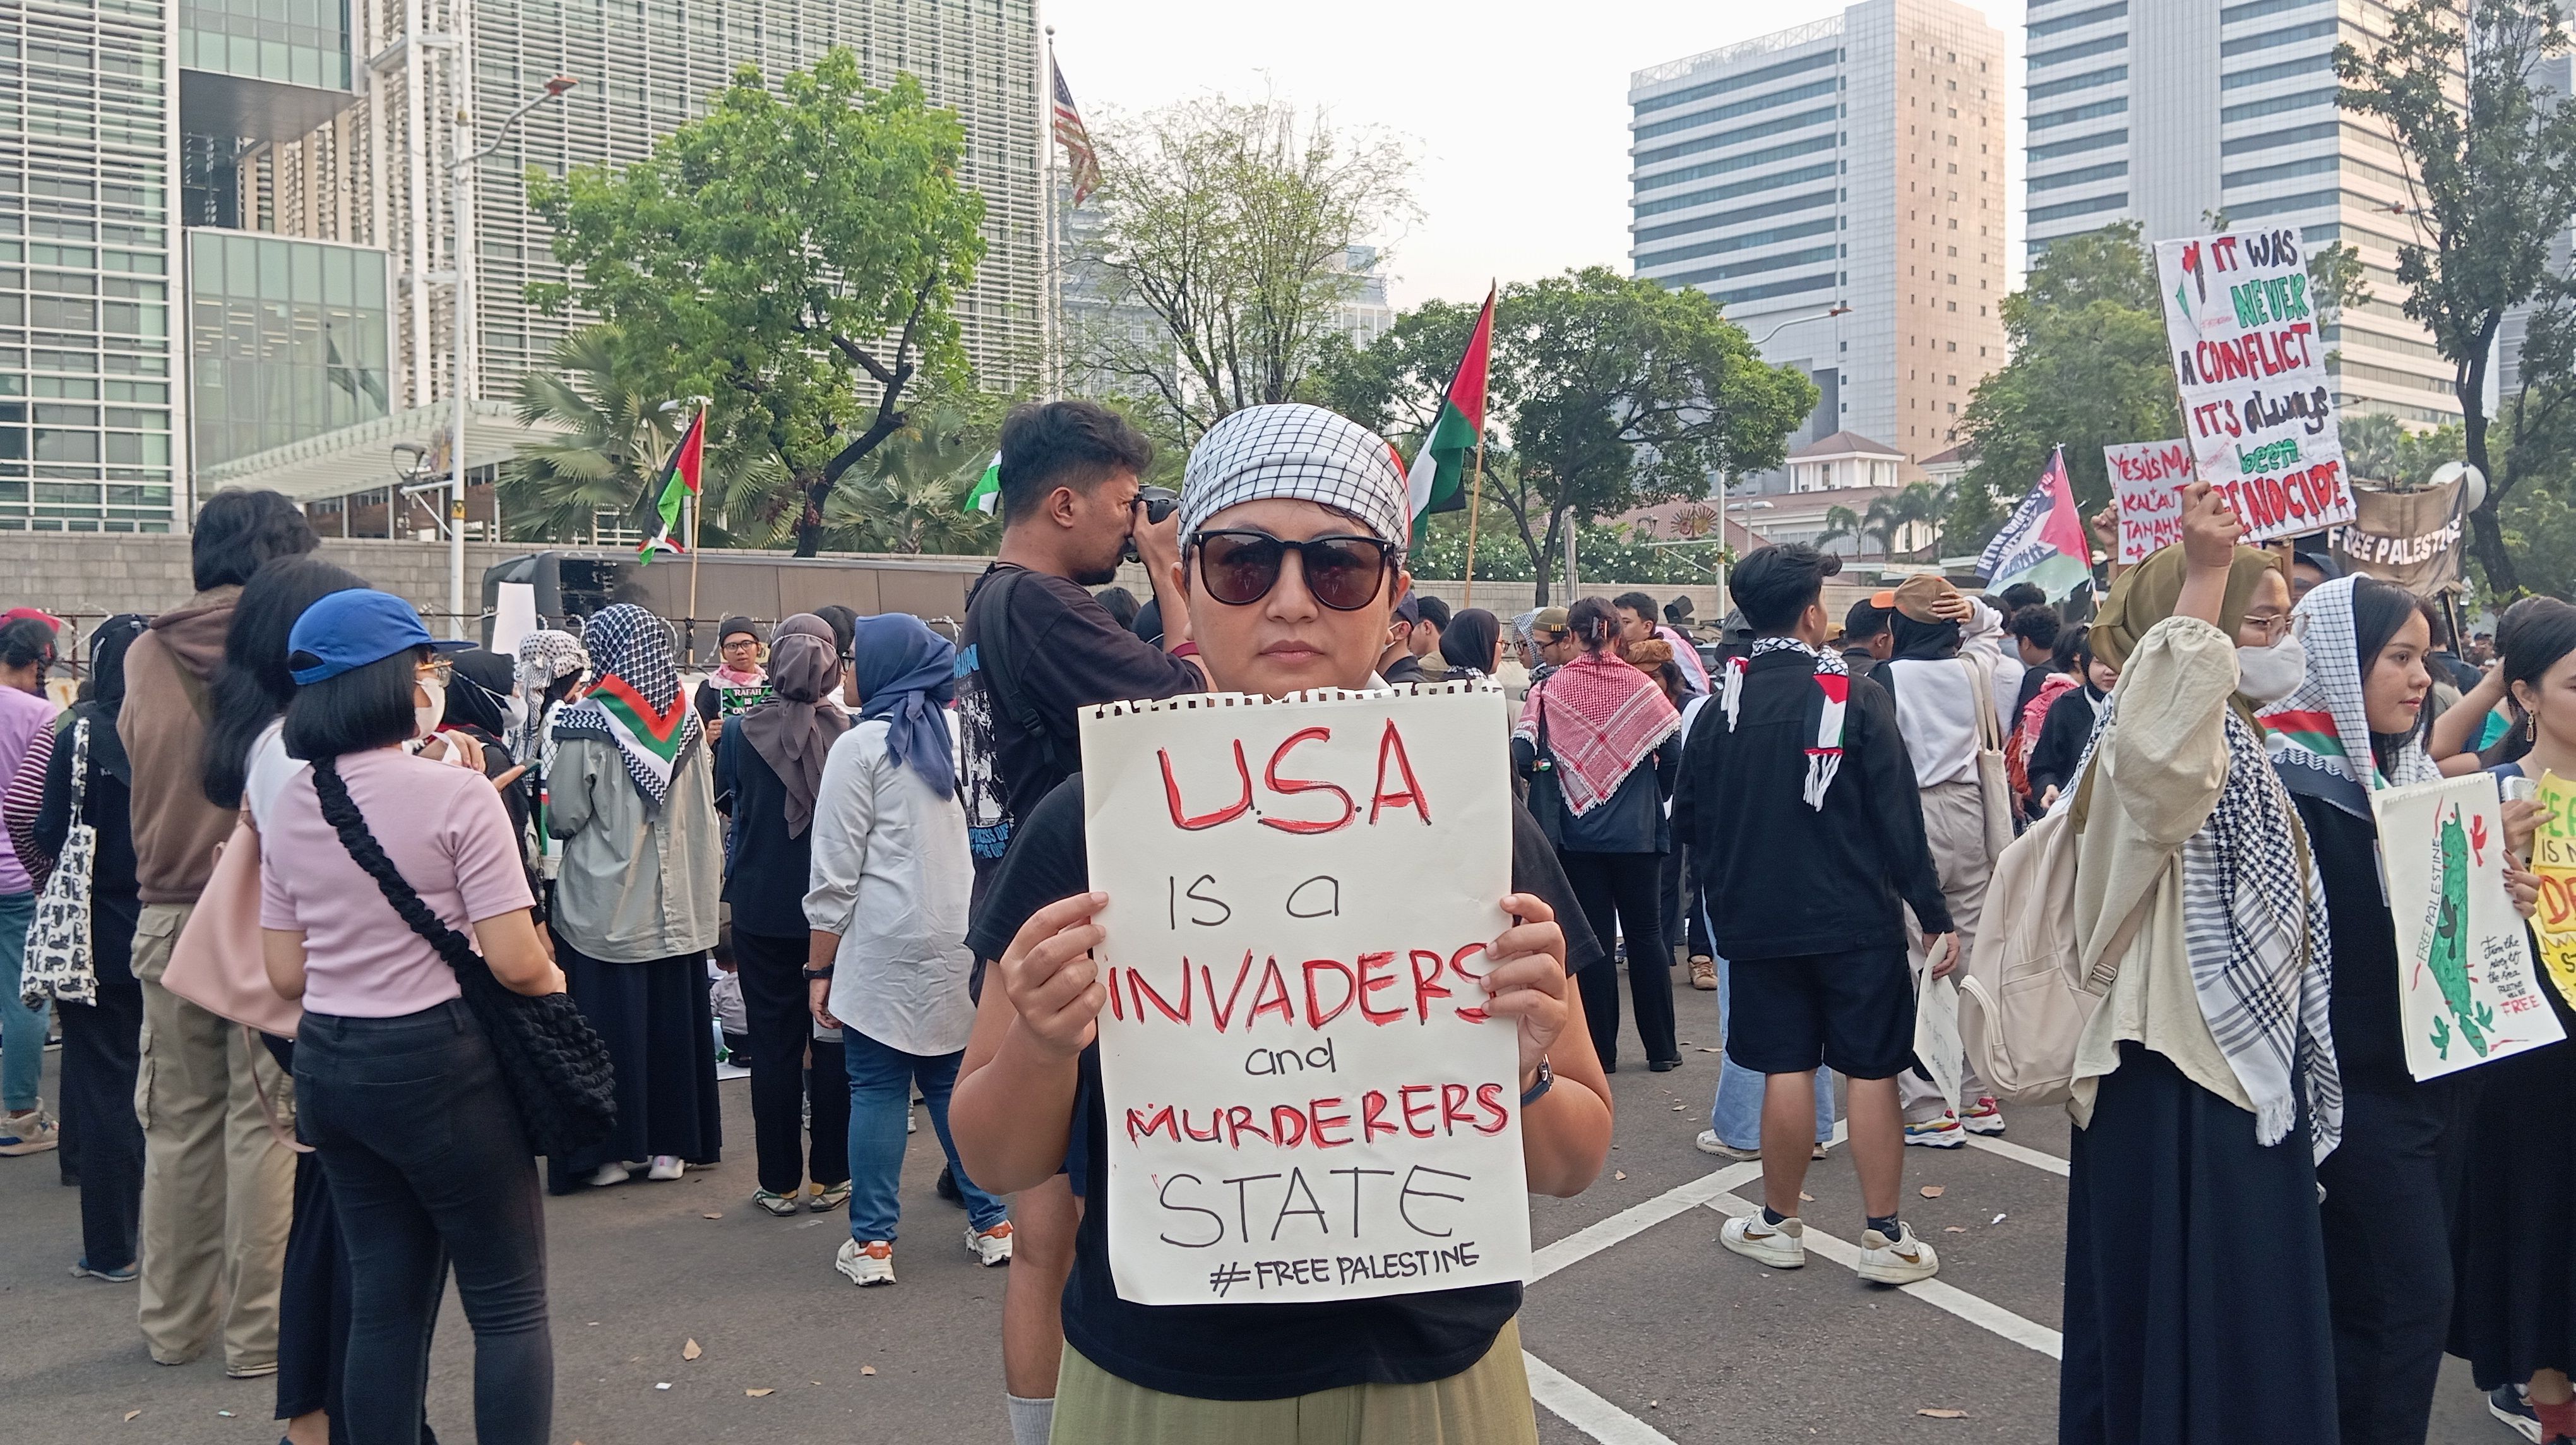 Unjuk Rasa Solidaritas Palestina di Kedubes AS, Massa Serukan Pembebasan Perempuan